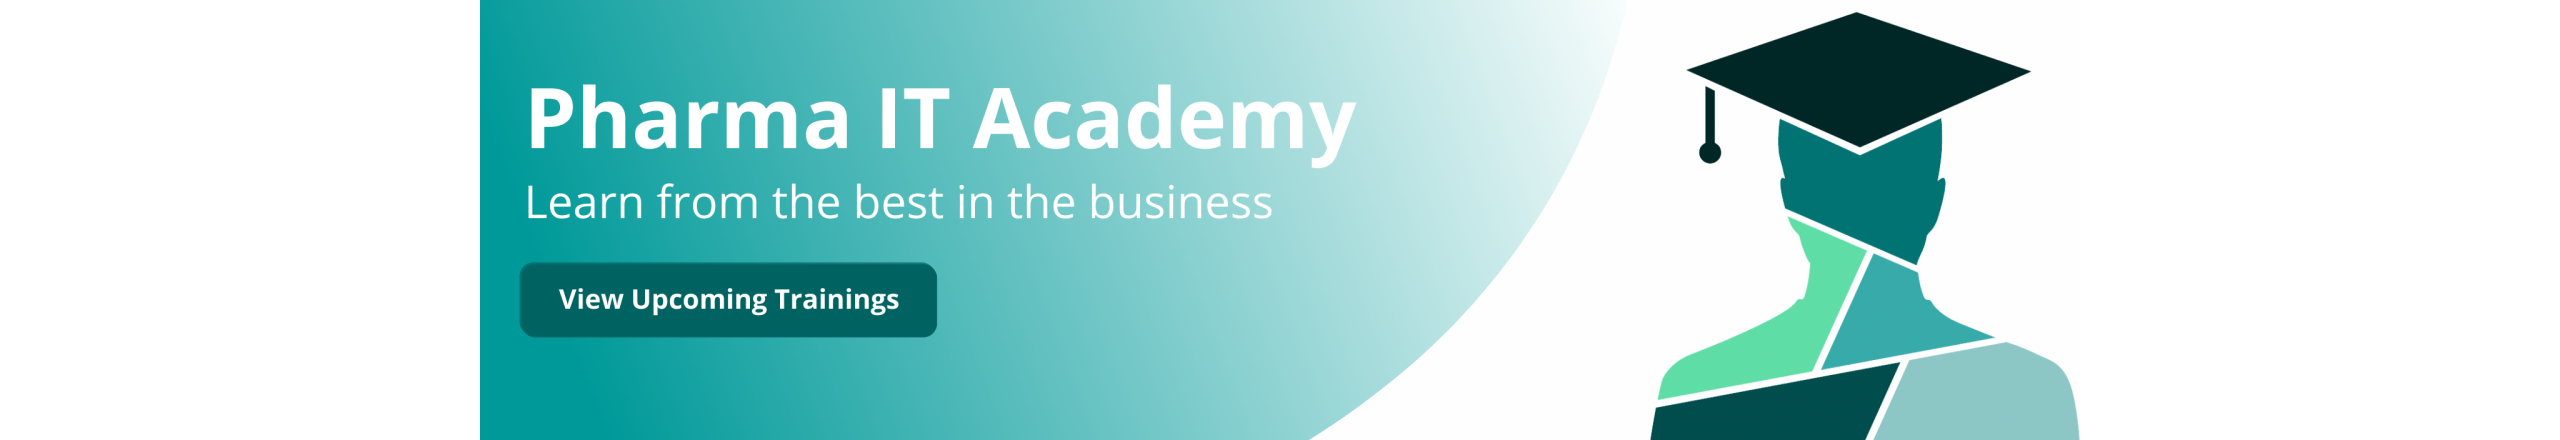 Pharma IT Academy Banner